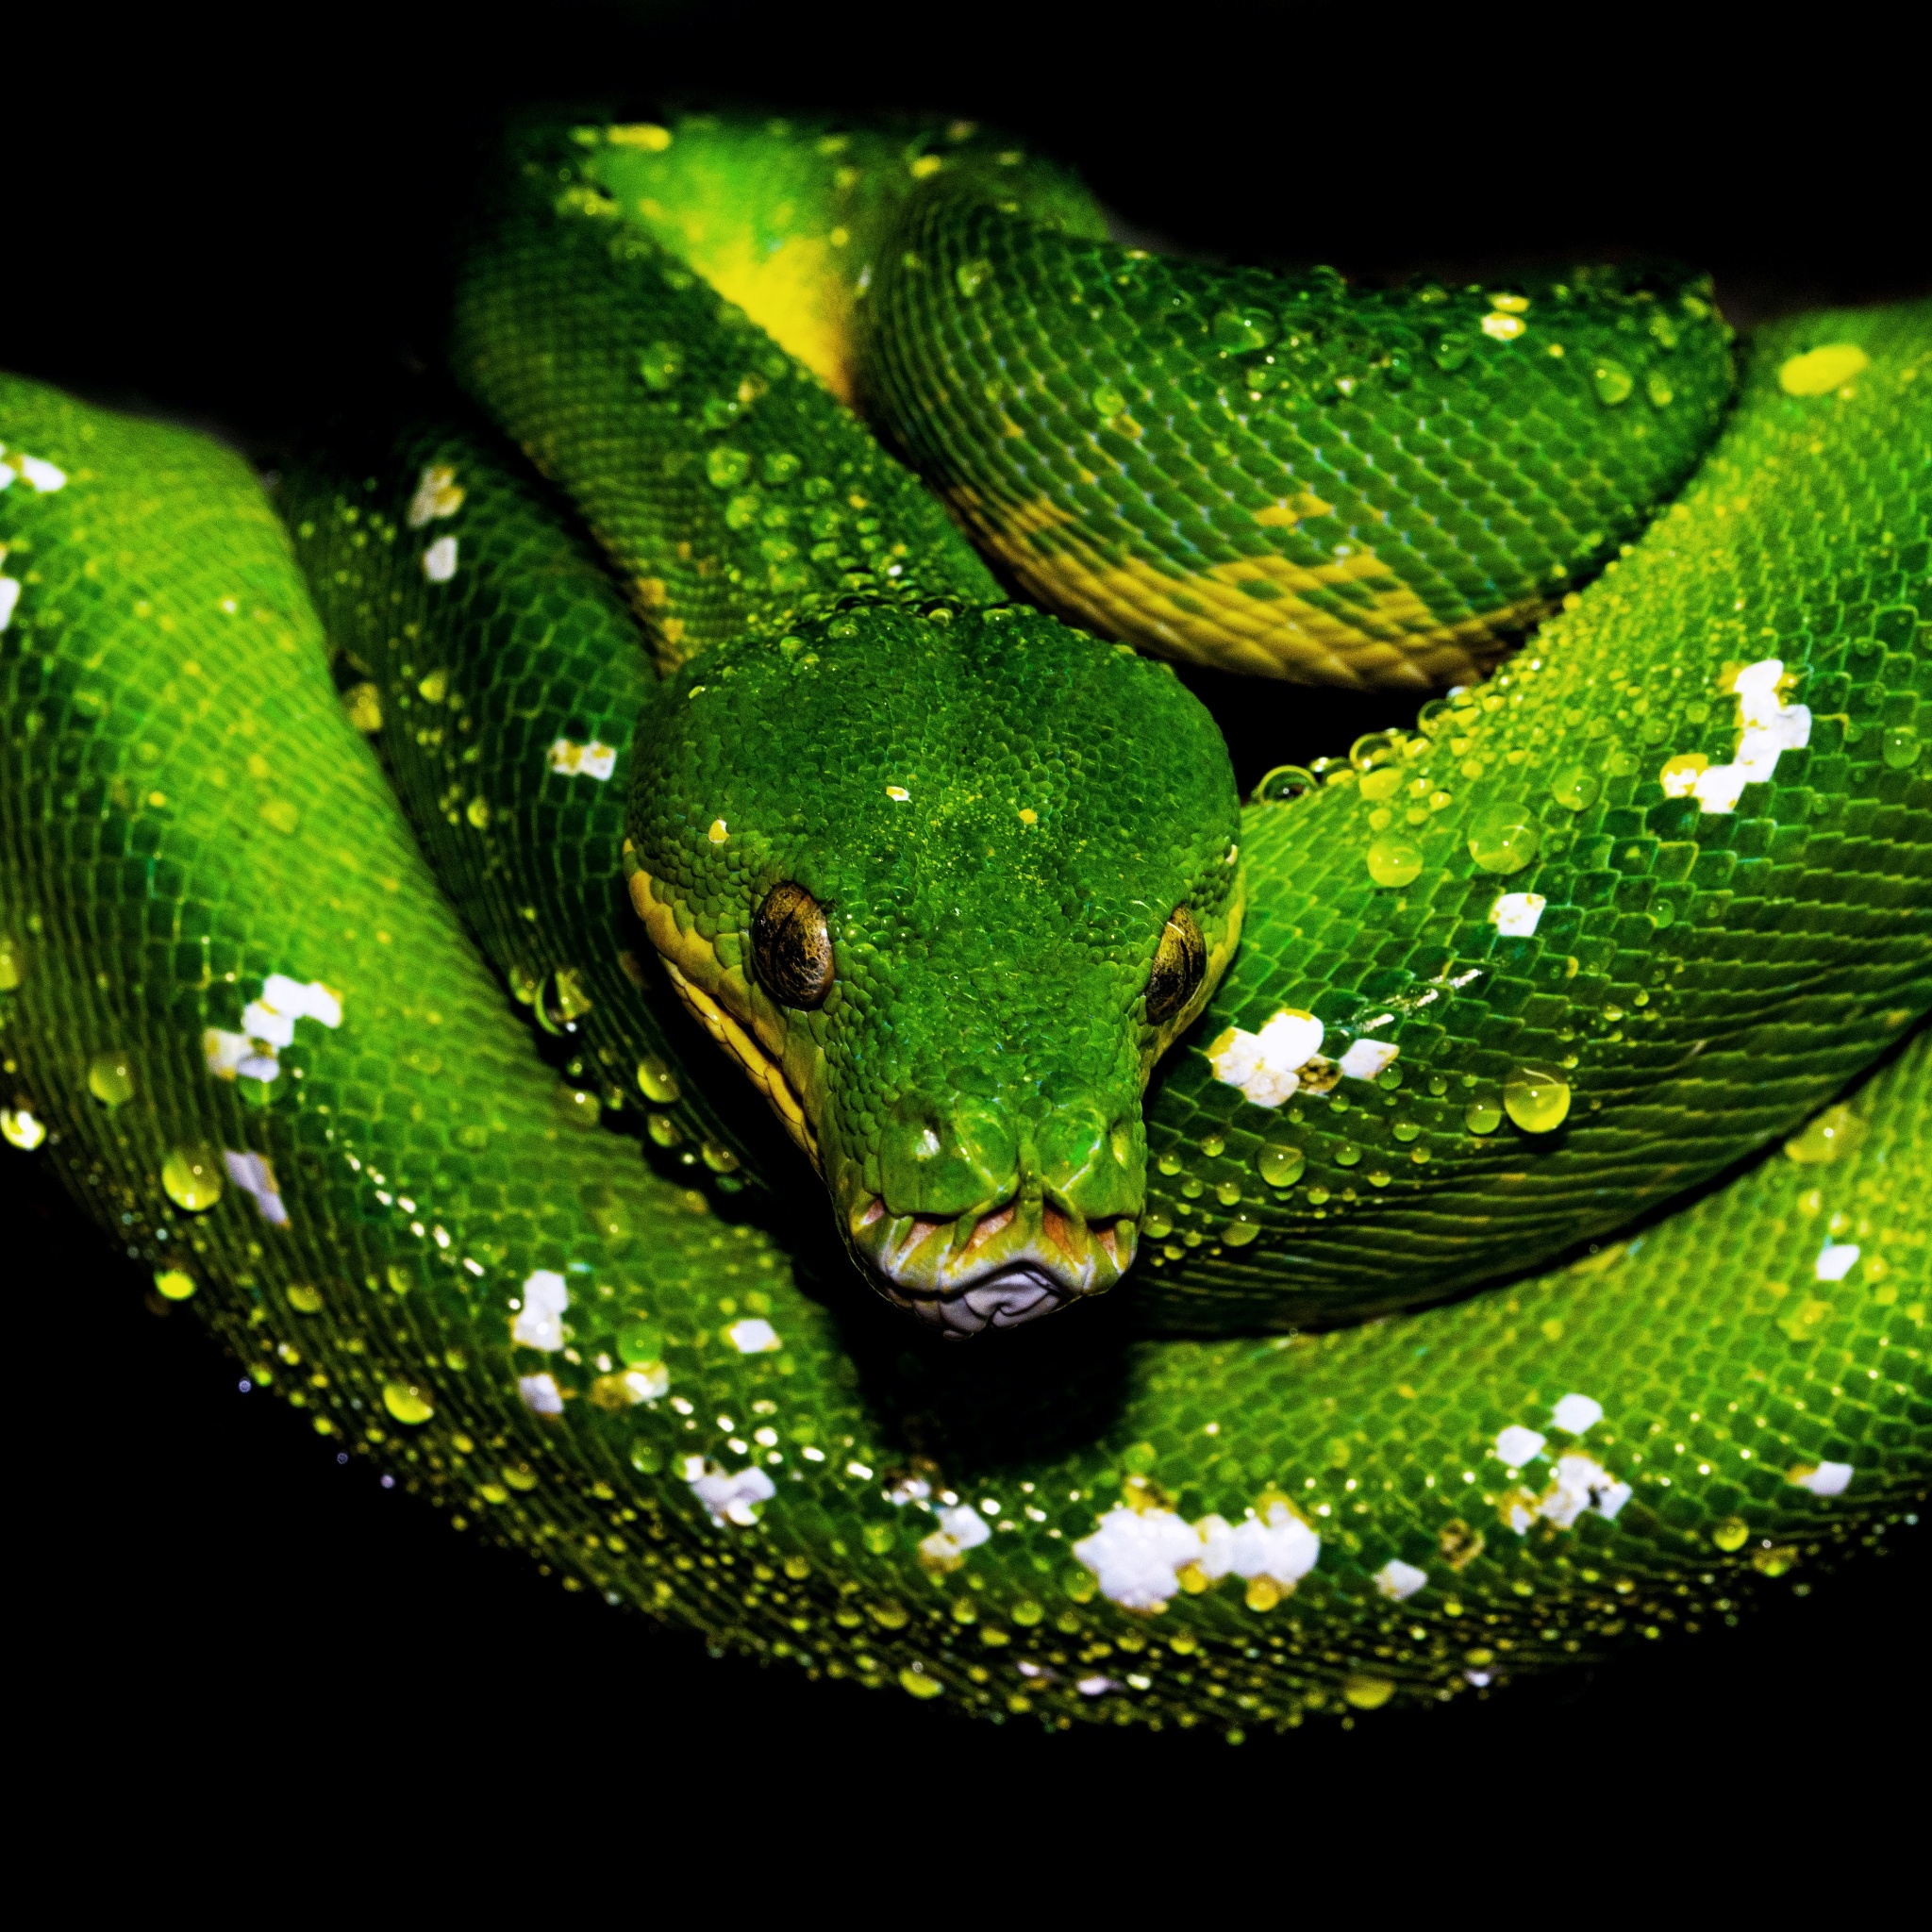 500+ Green Snake Pictures | Download Free Images on Unsplash